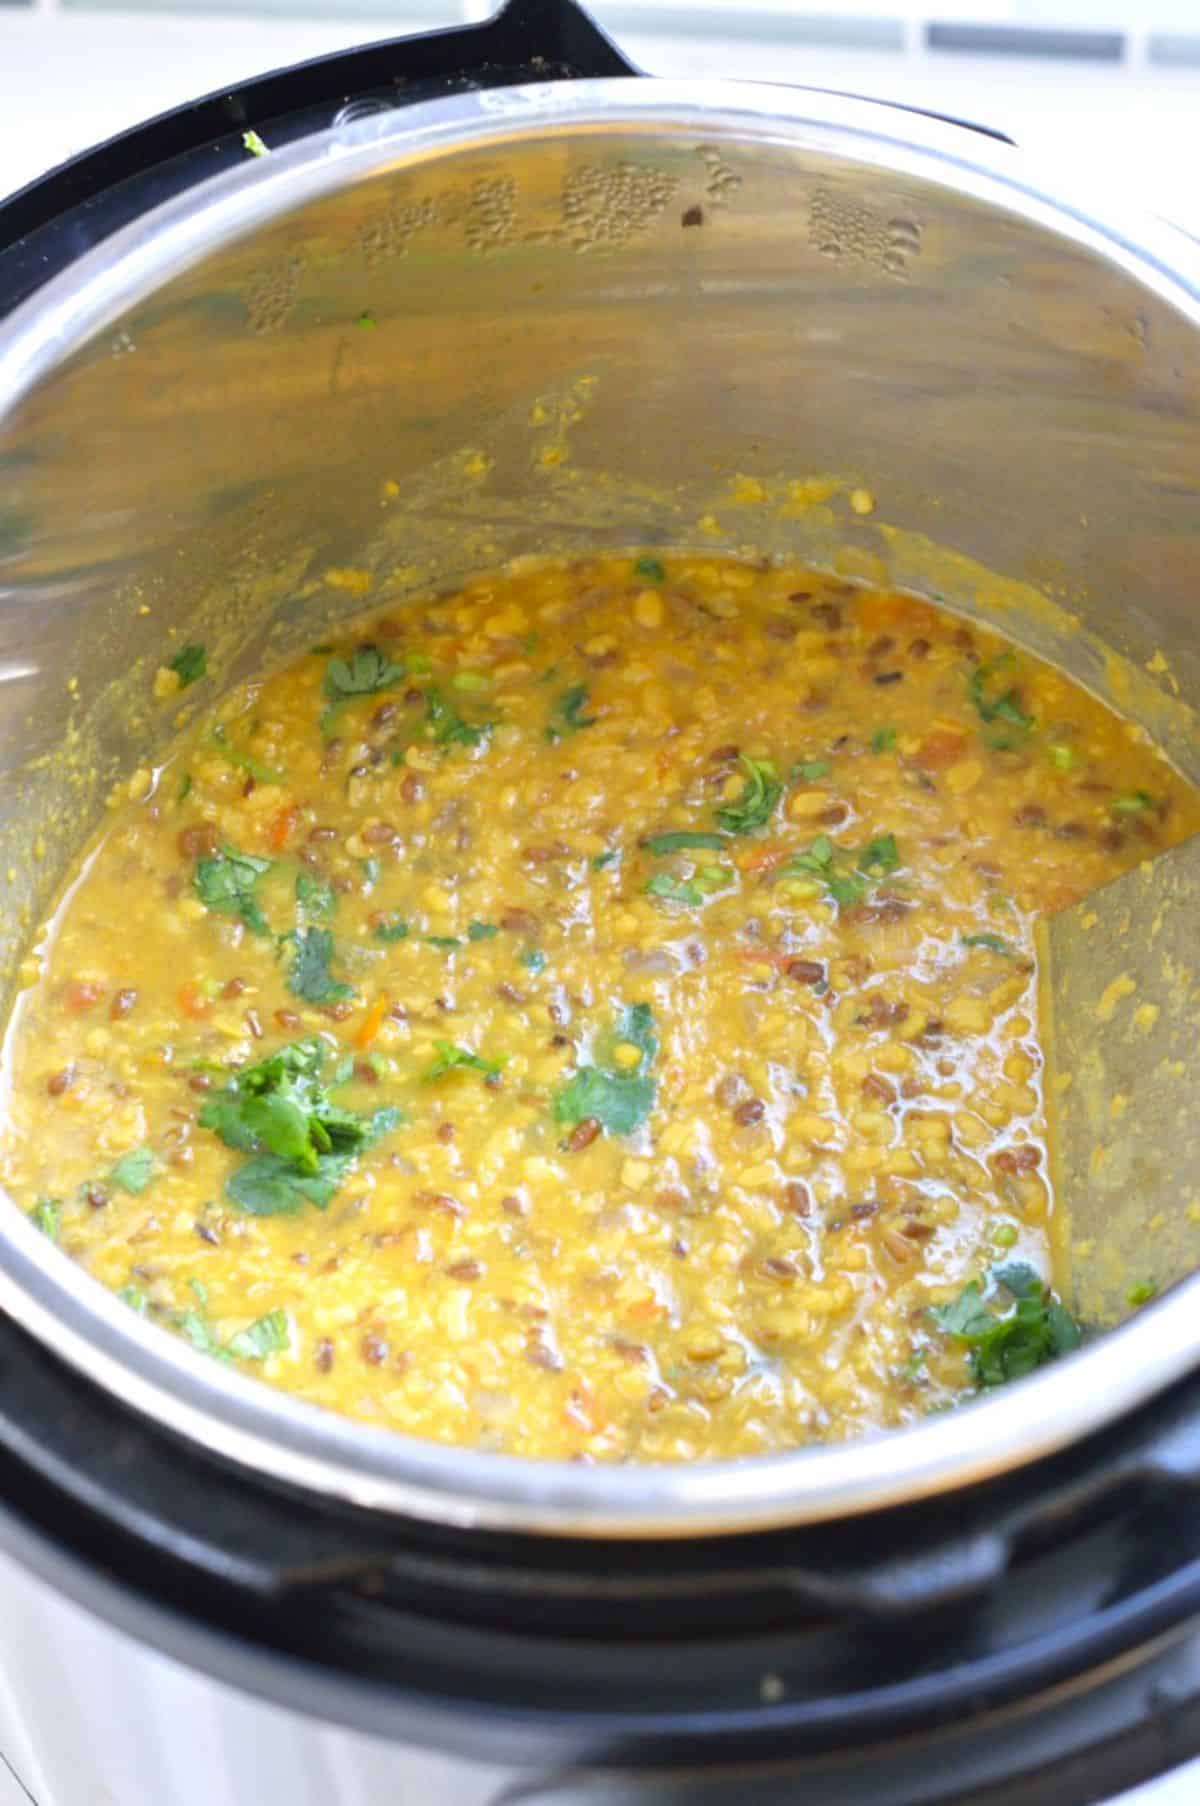 Spicy Indian Urad Dal in a pot.